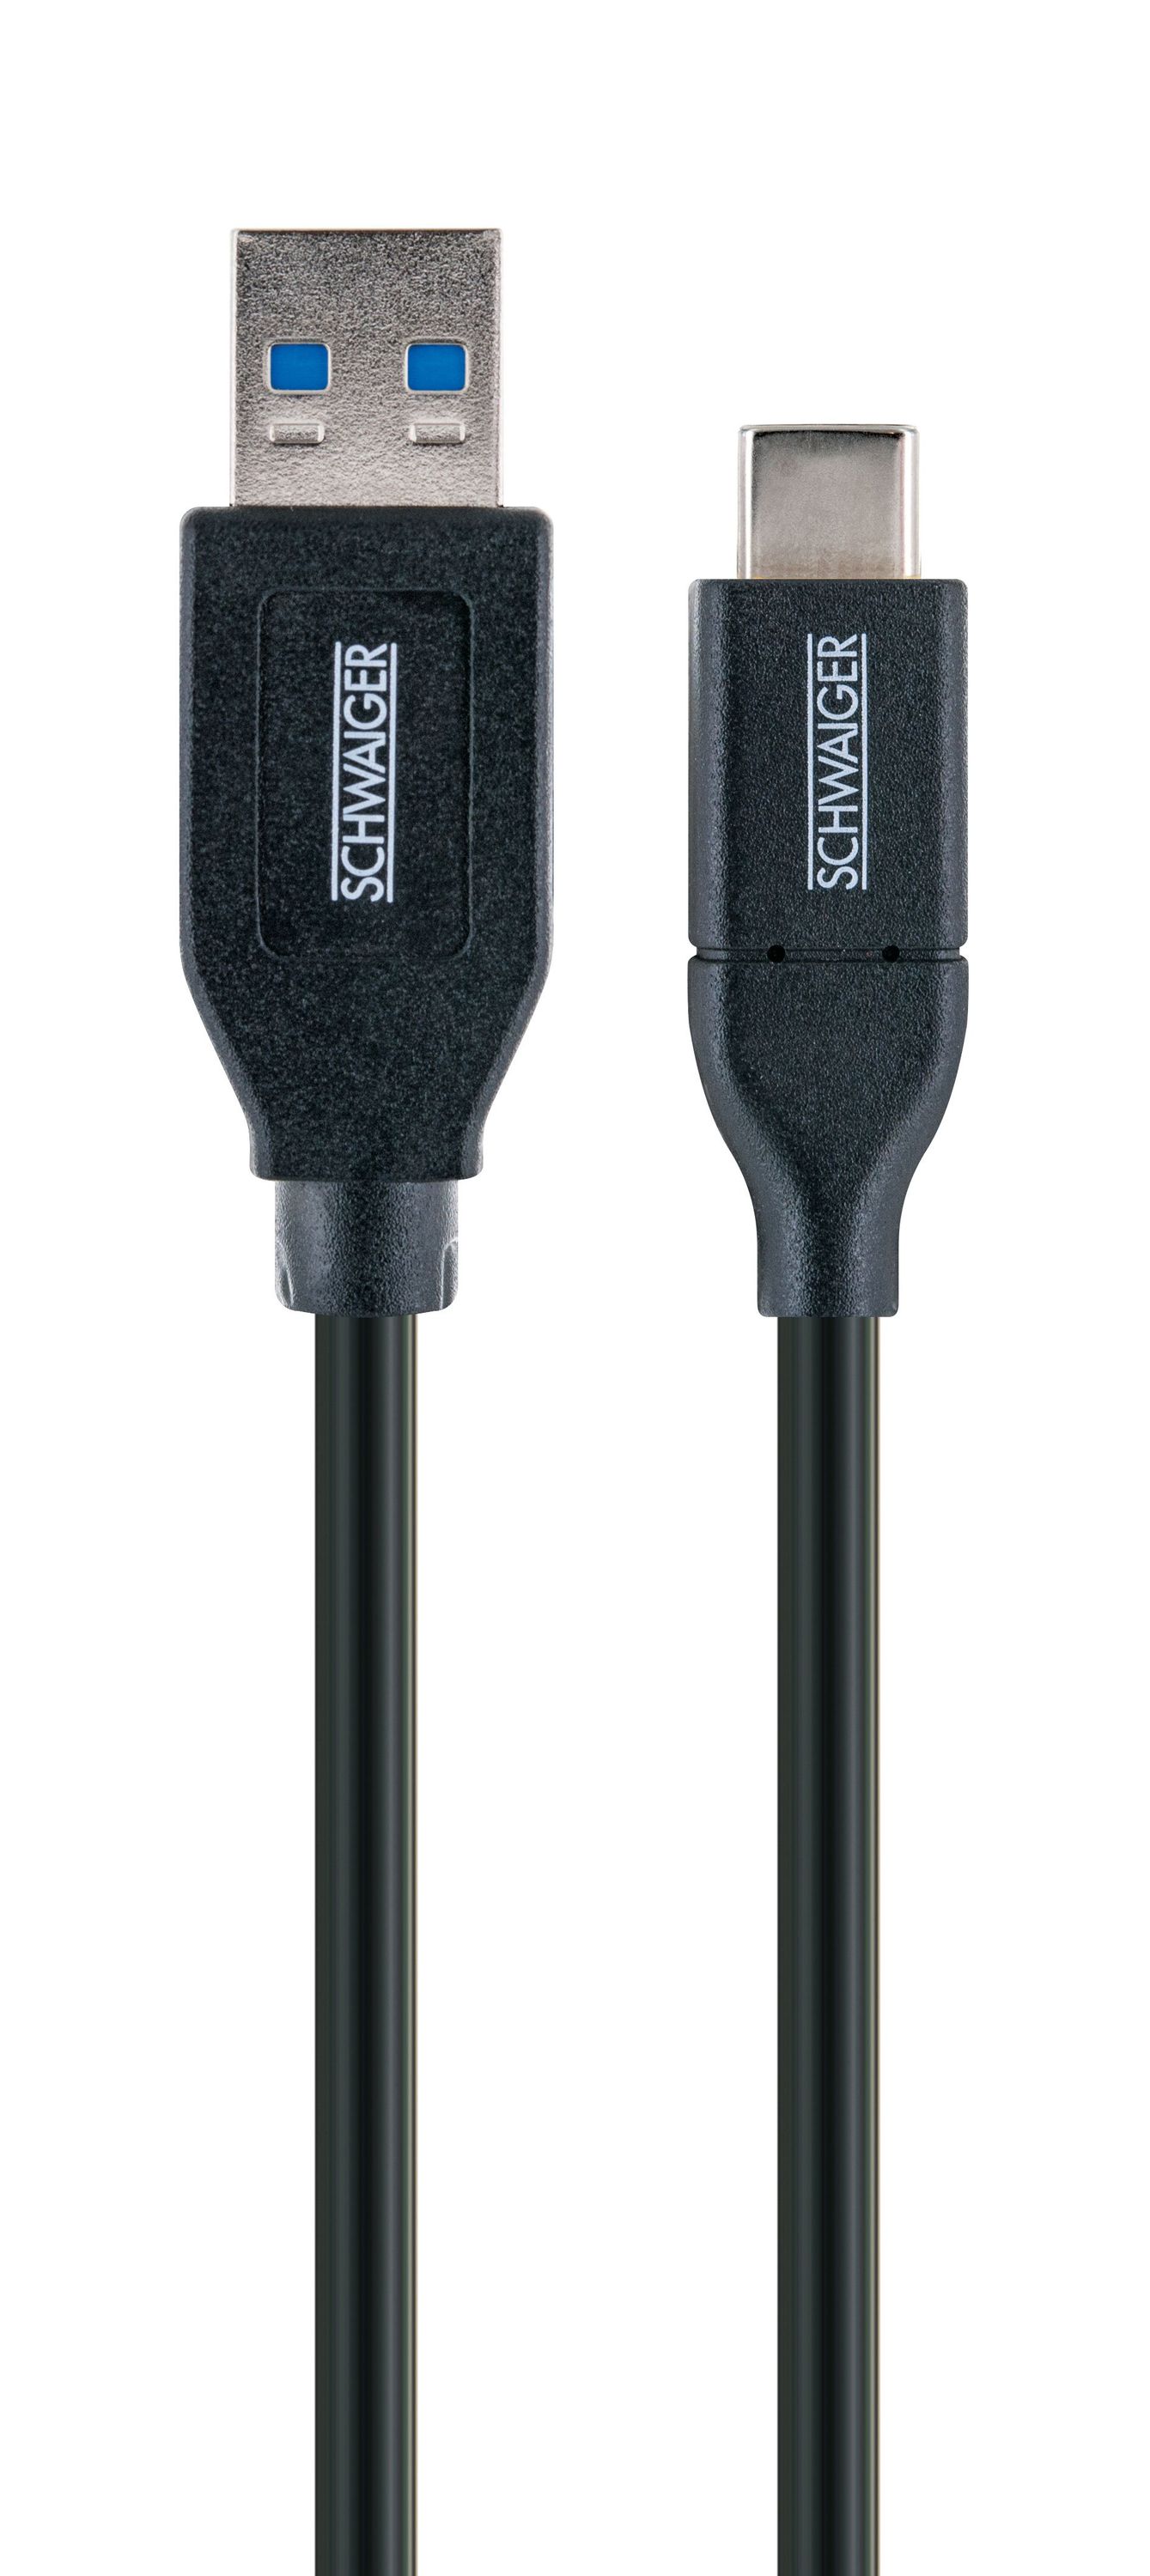 SCHWAIGER USB 3.1 Adapterkabel, Schwarz CK3141533